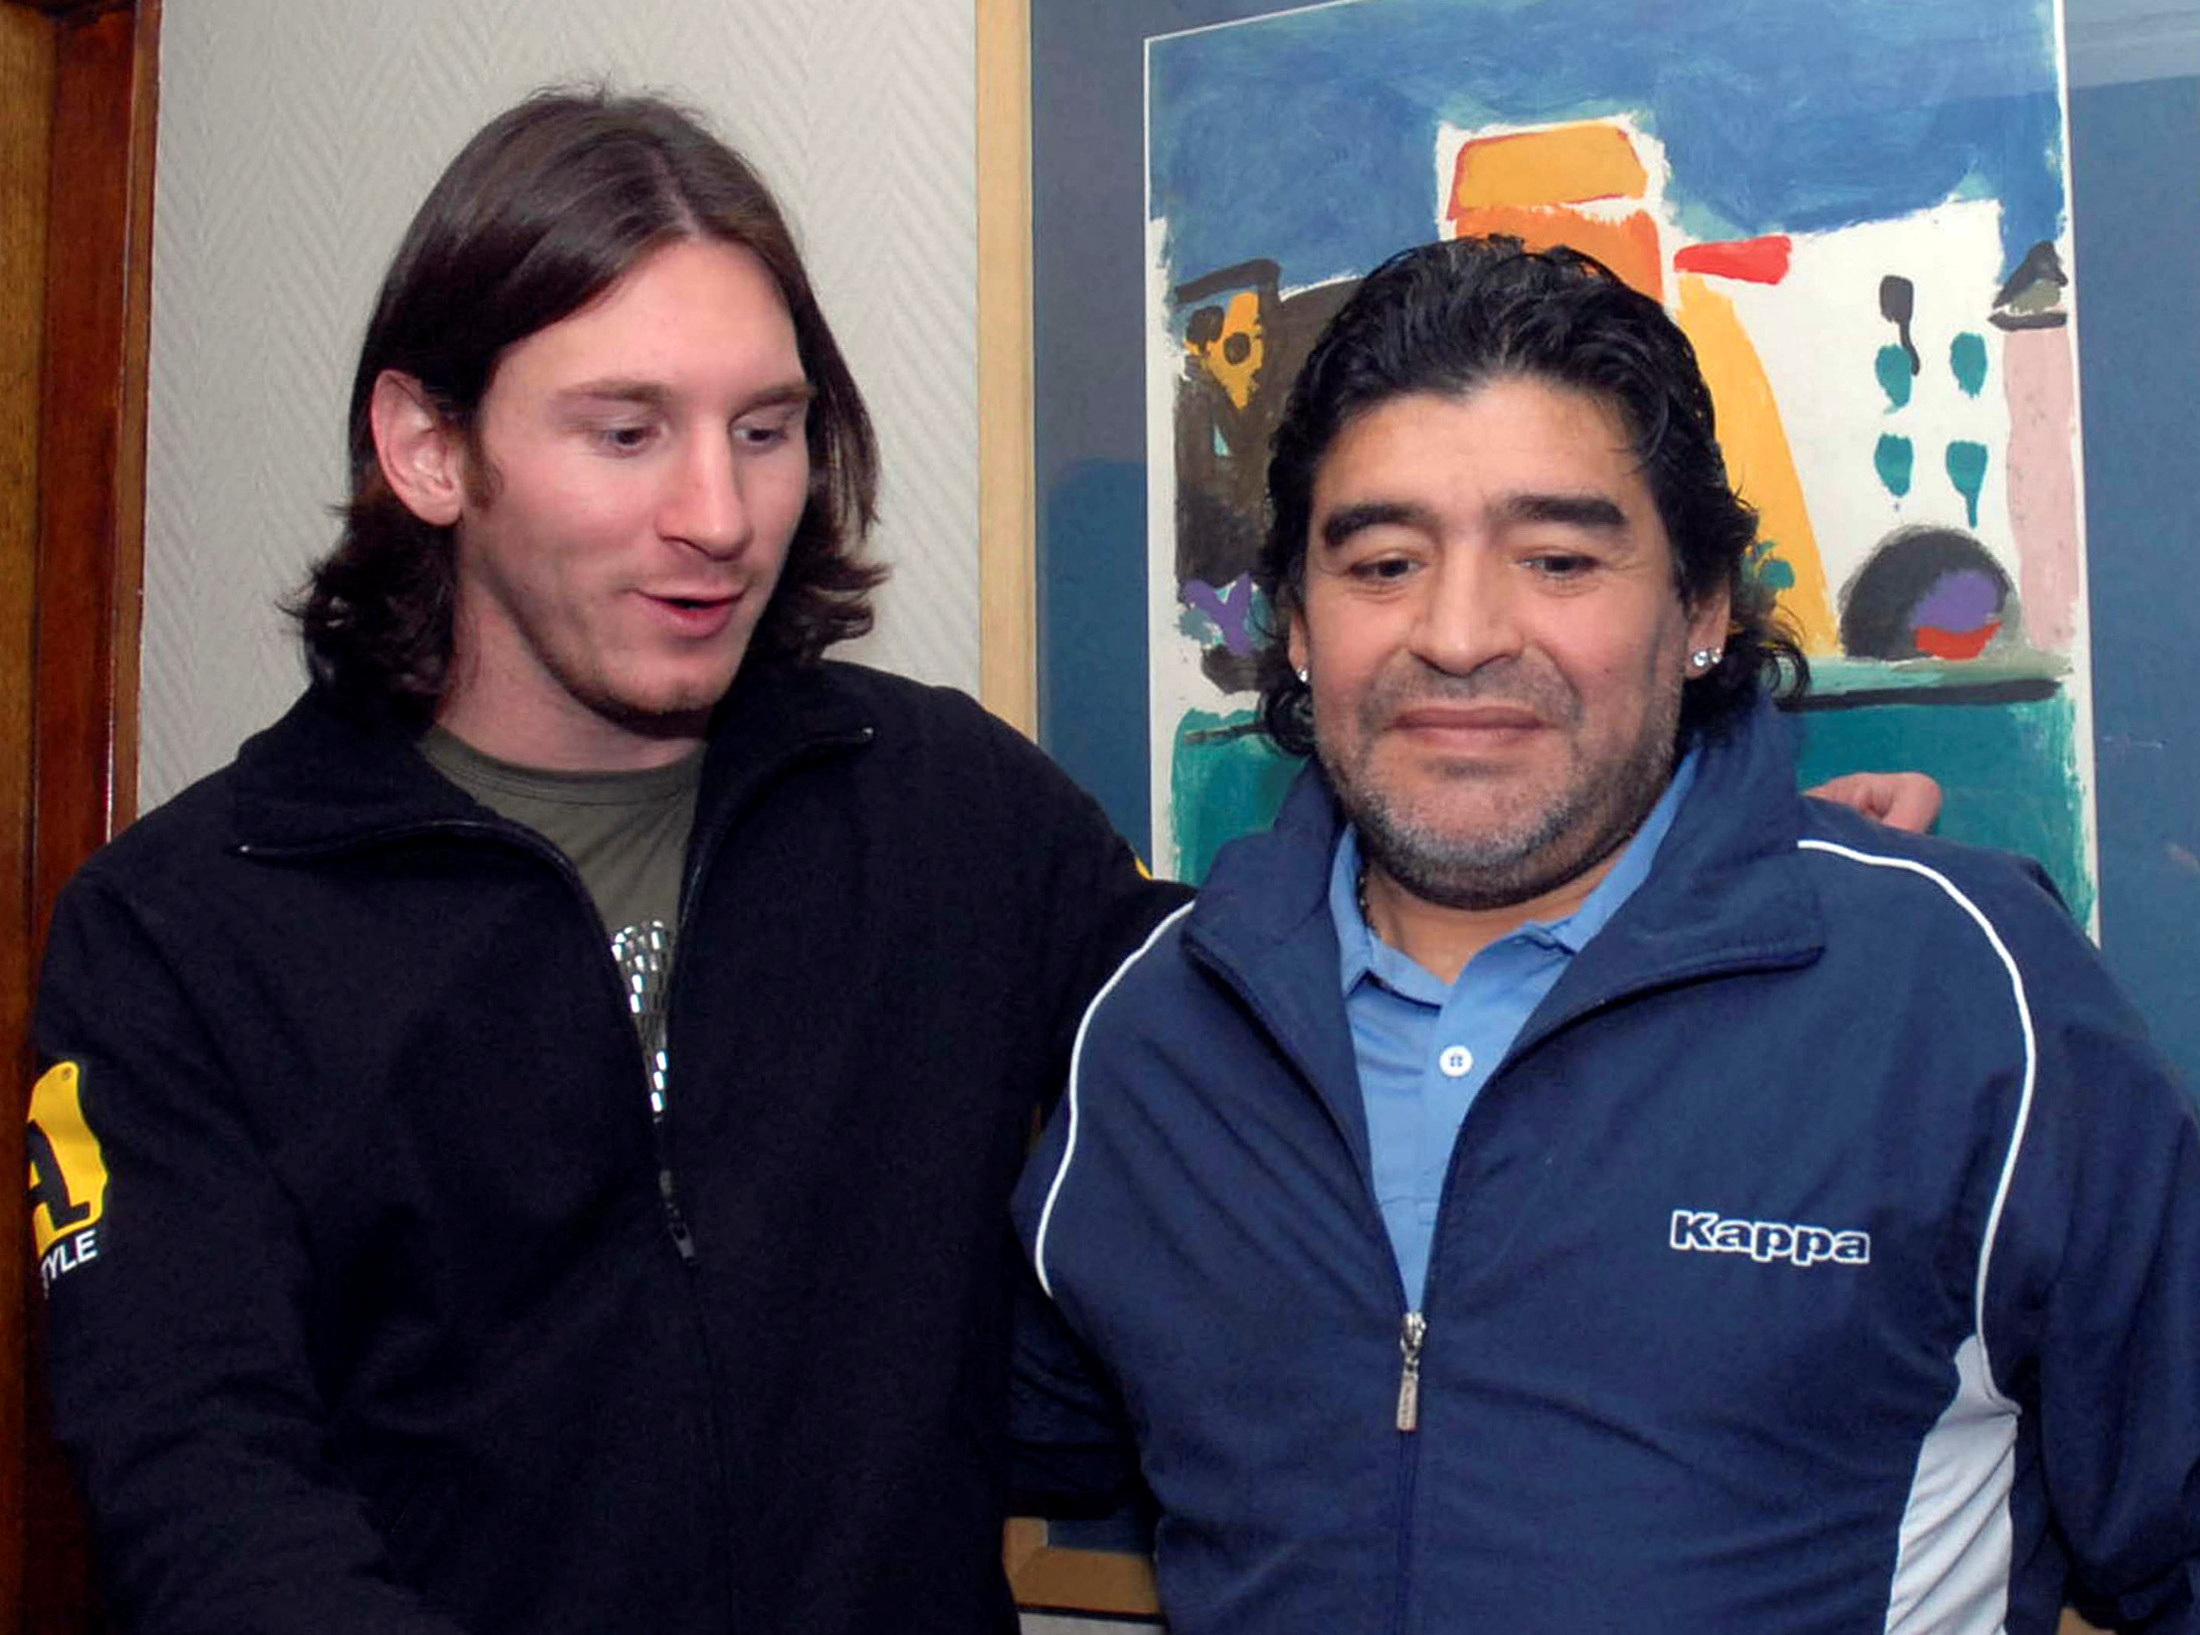 Argentine soccer player Messi meets former soccer star Maradona in Rosario